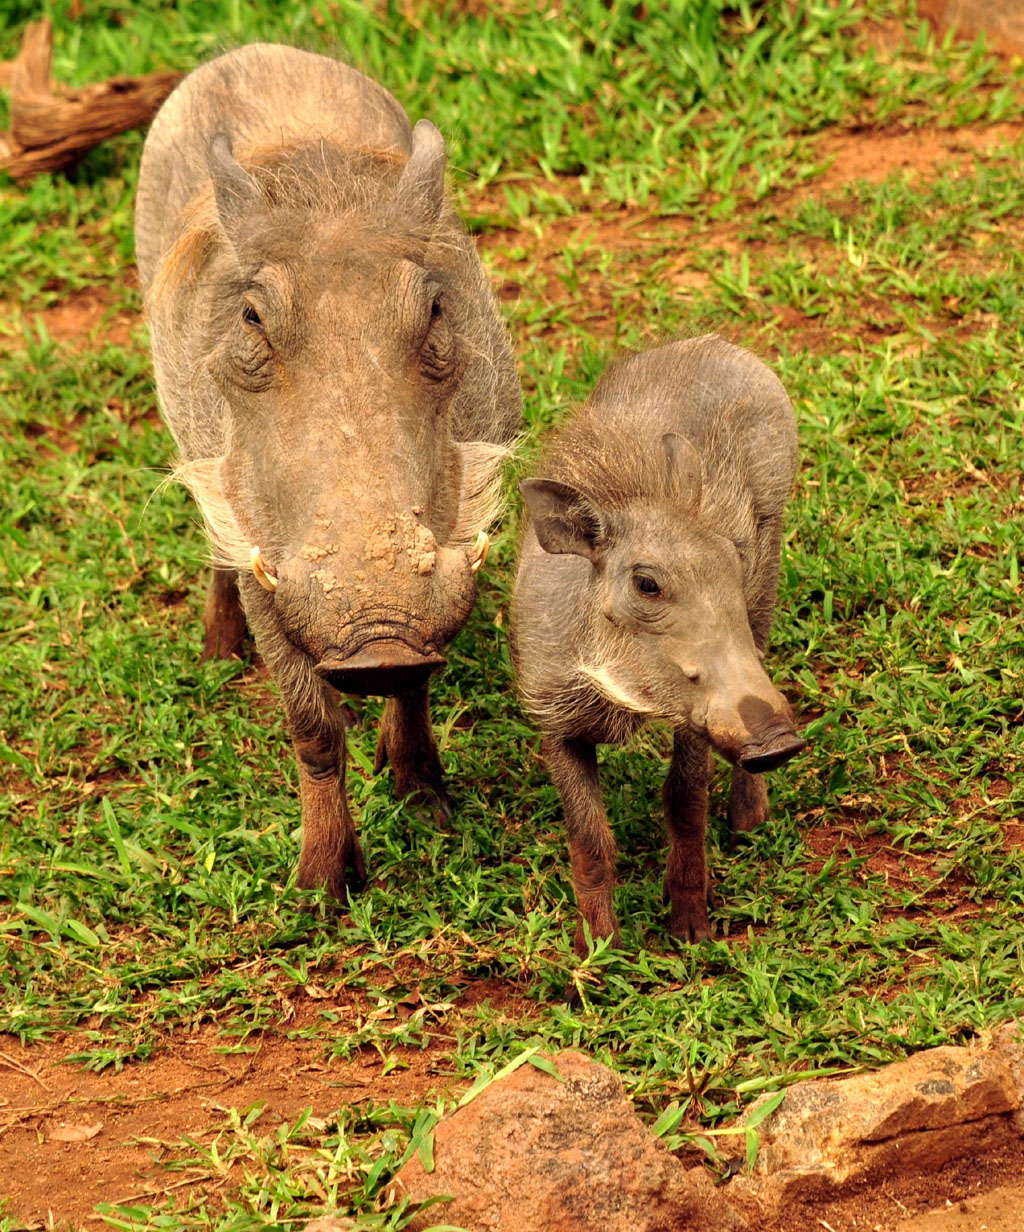 Warthog and baby warthog playing Feb 2018